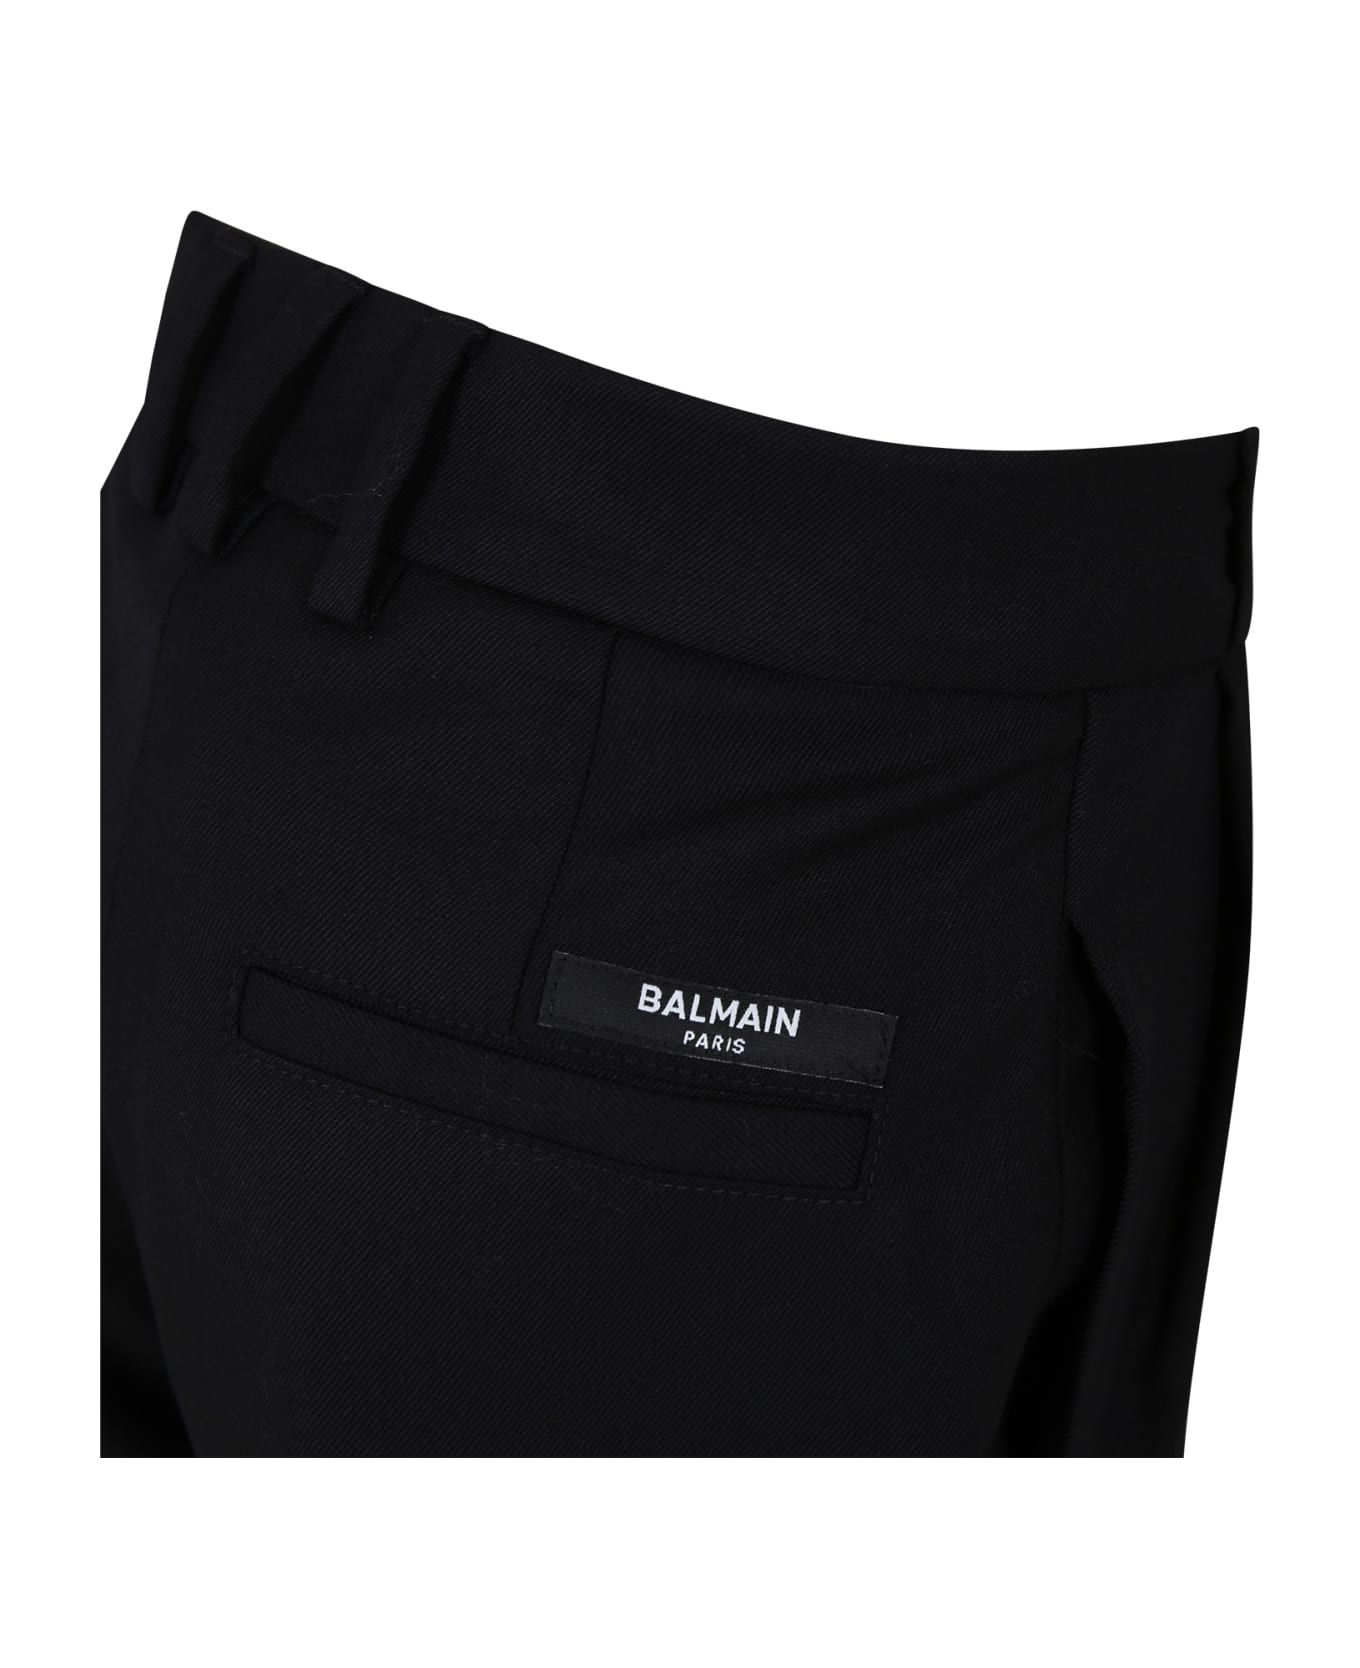 Balmain Black Shorts For Boy - Black